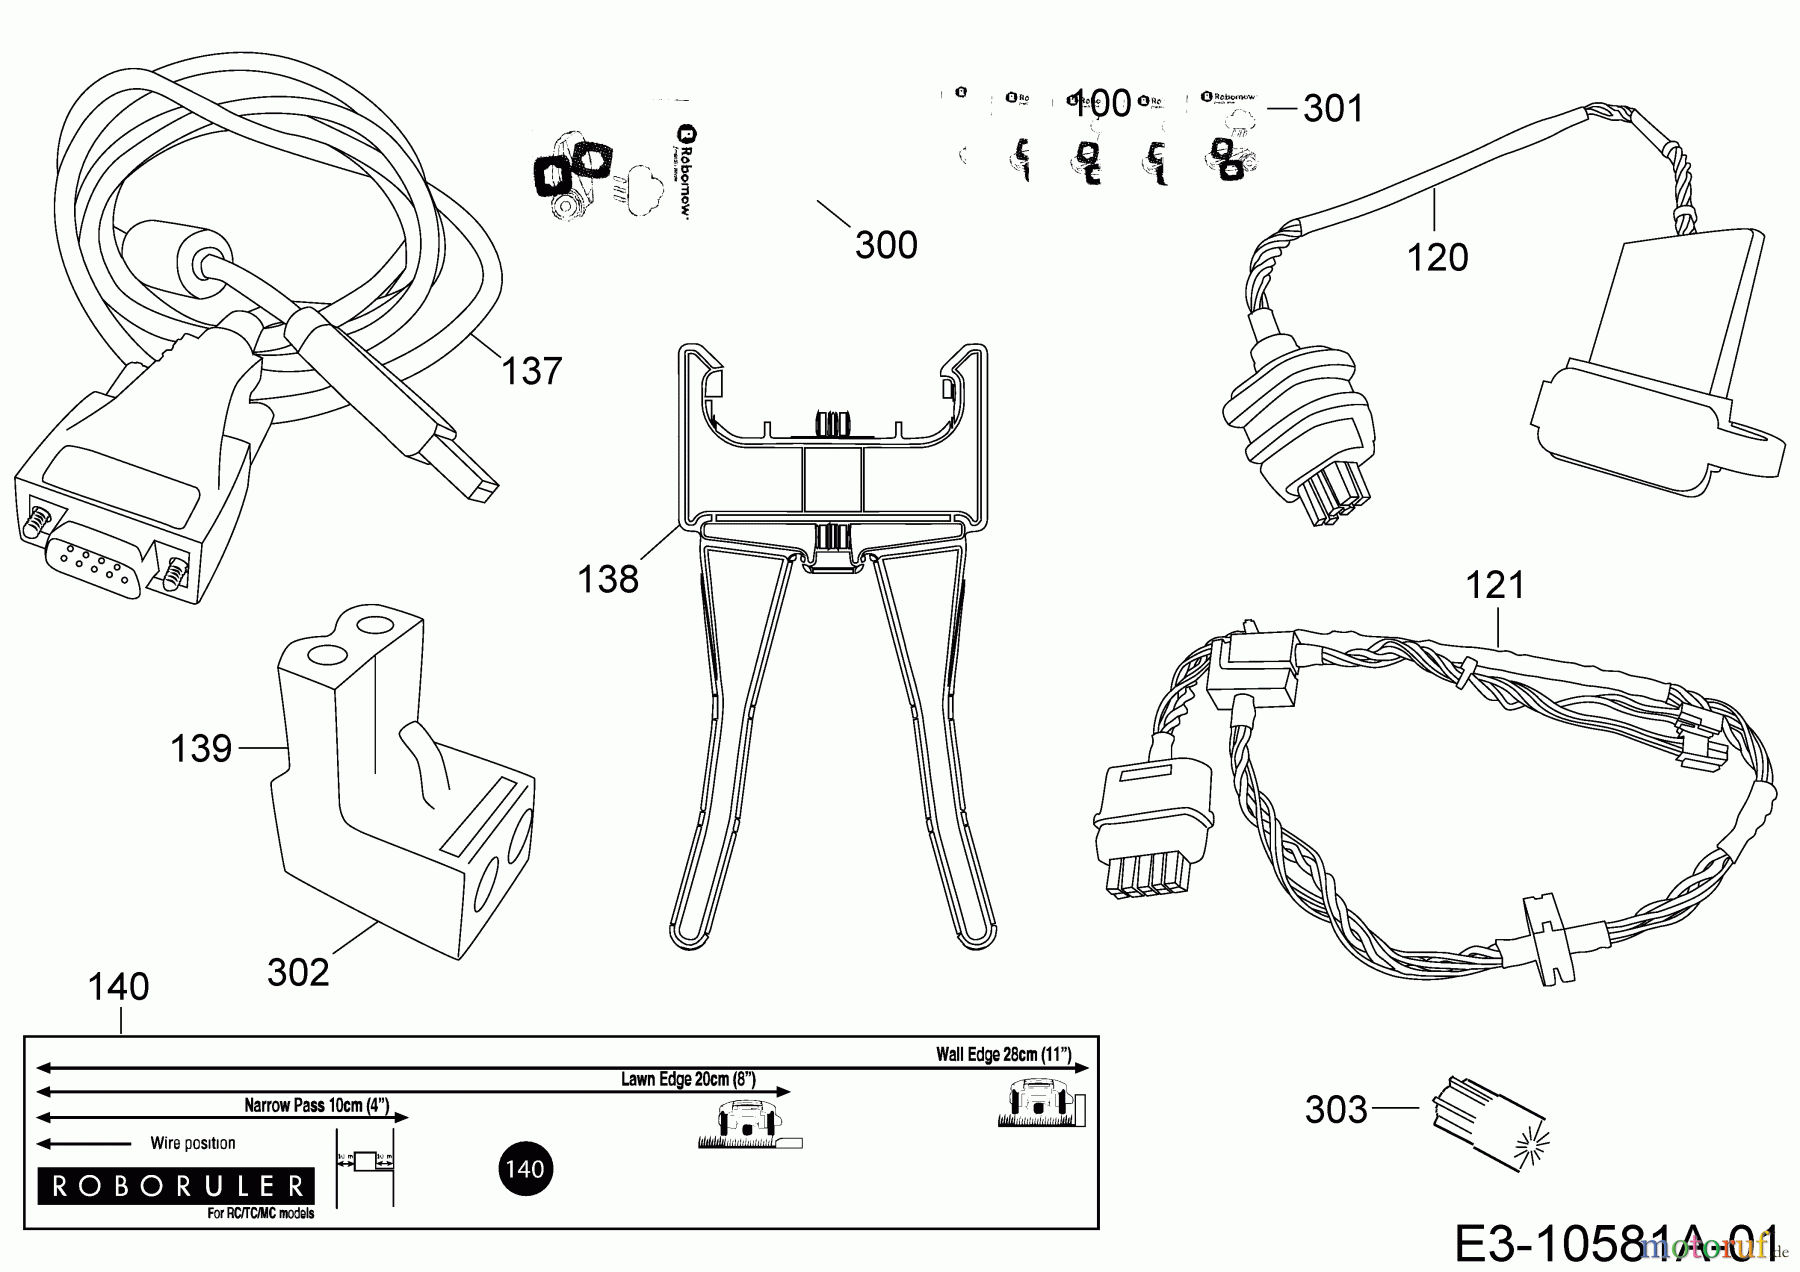  Robomow Mähroboter MC300 PRD7004Y  (2014) Kabel, Kabelanschluß, Regensensor, Werkzeug